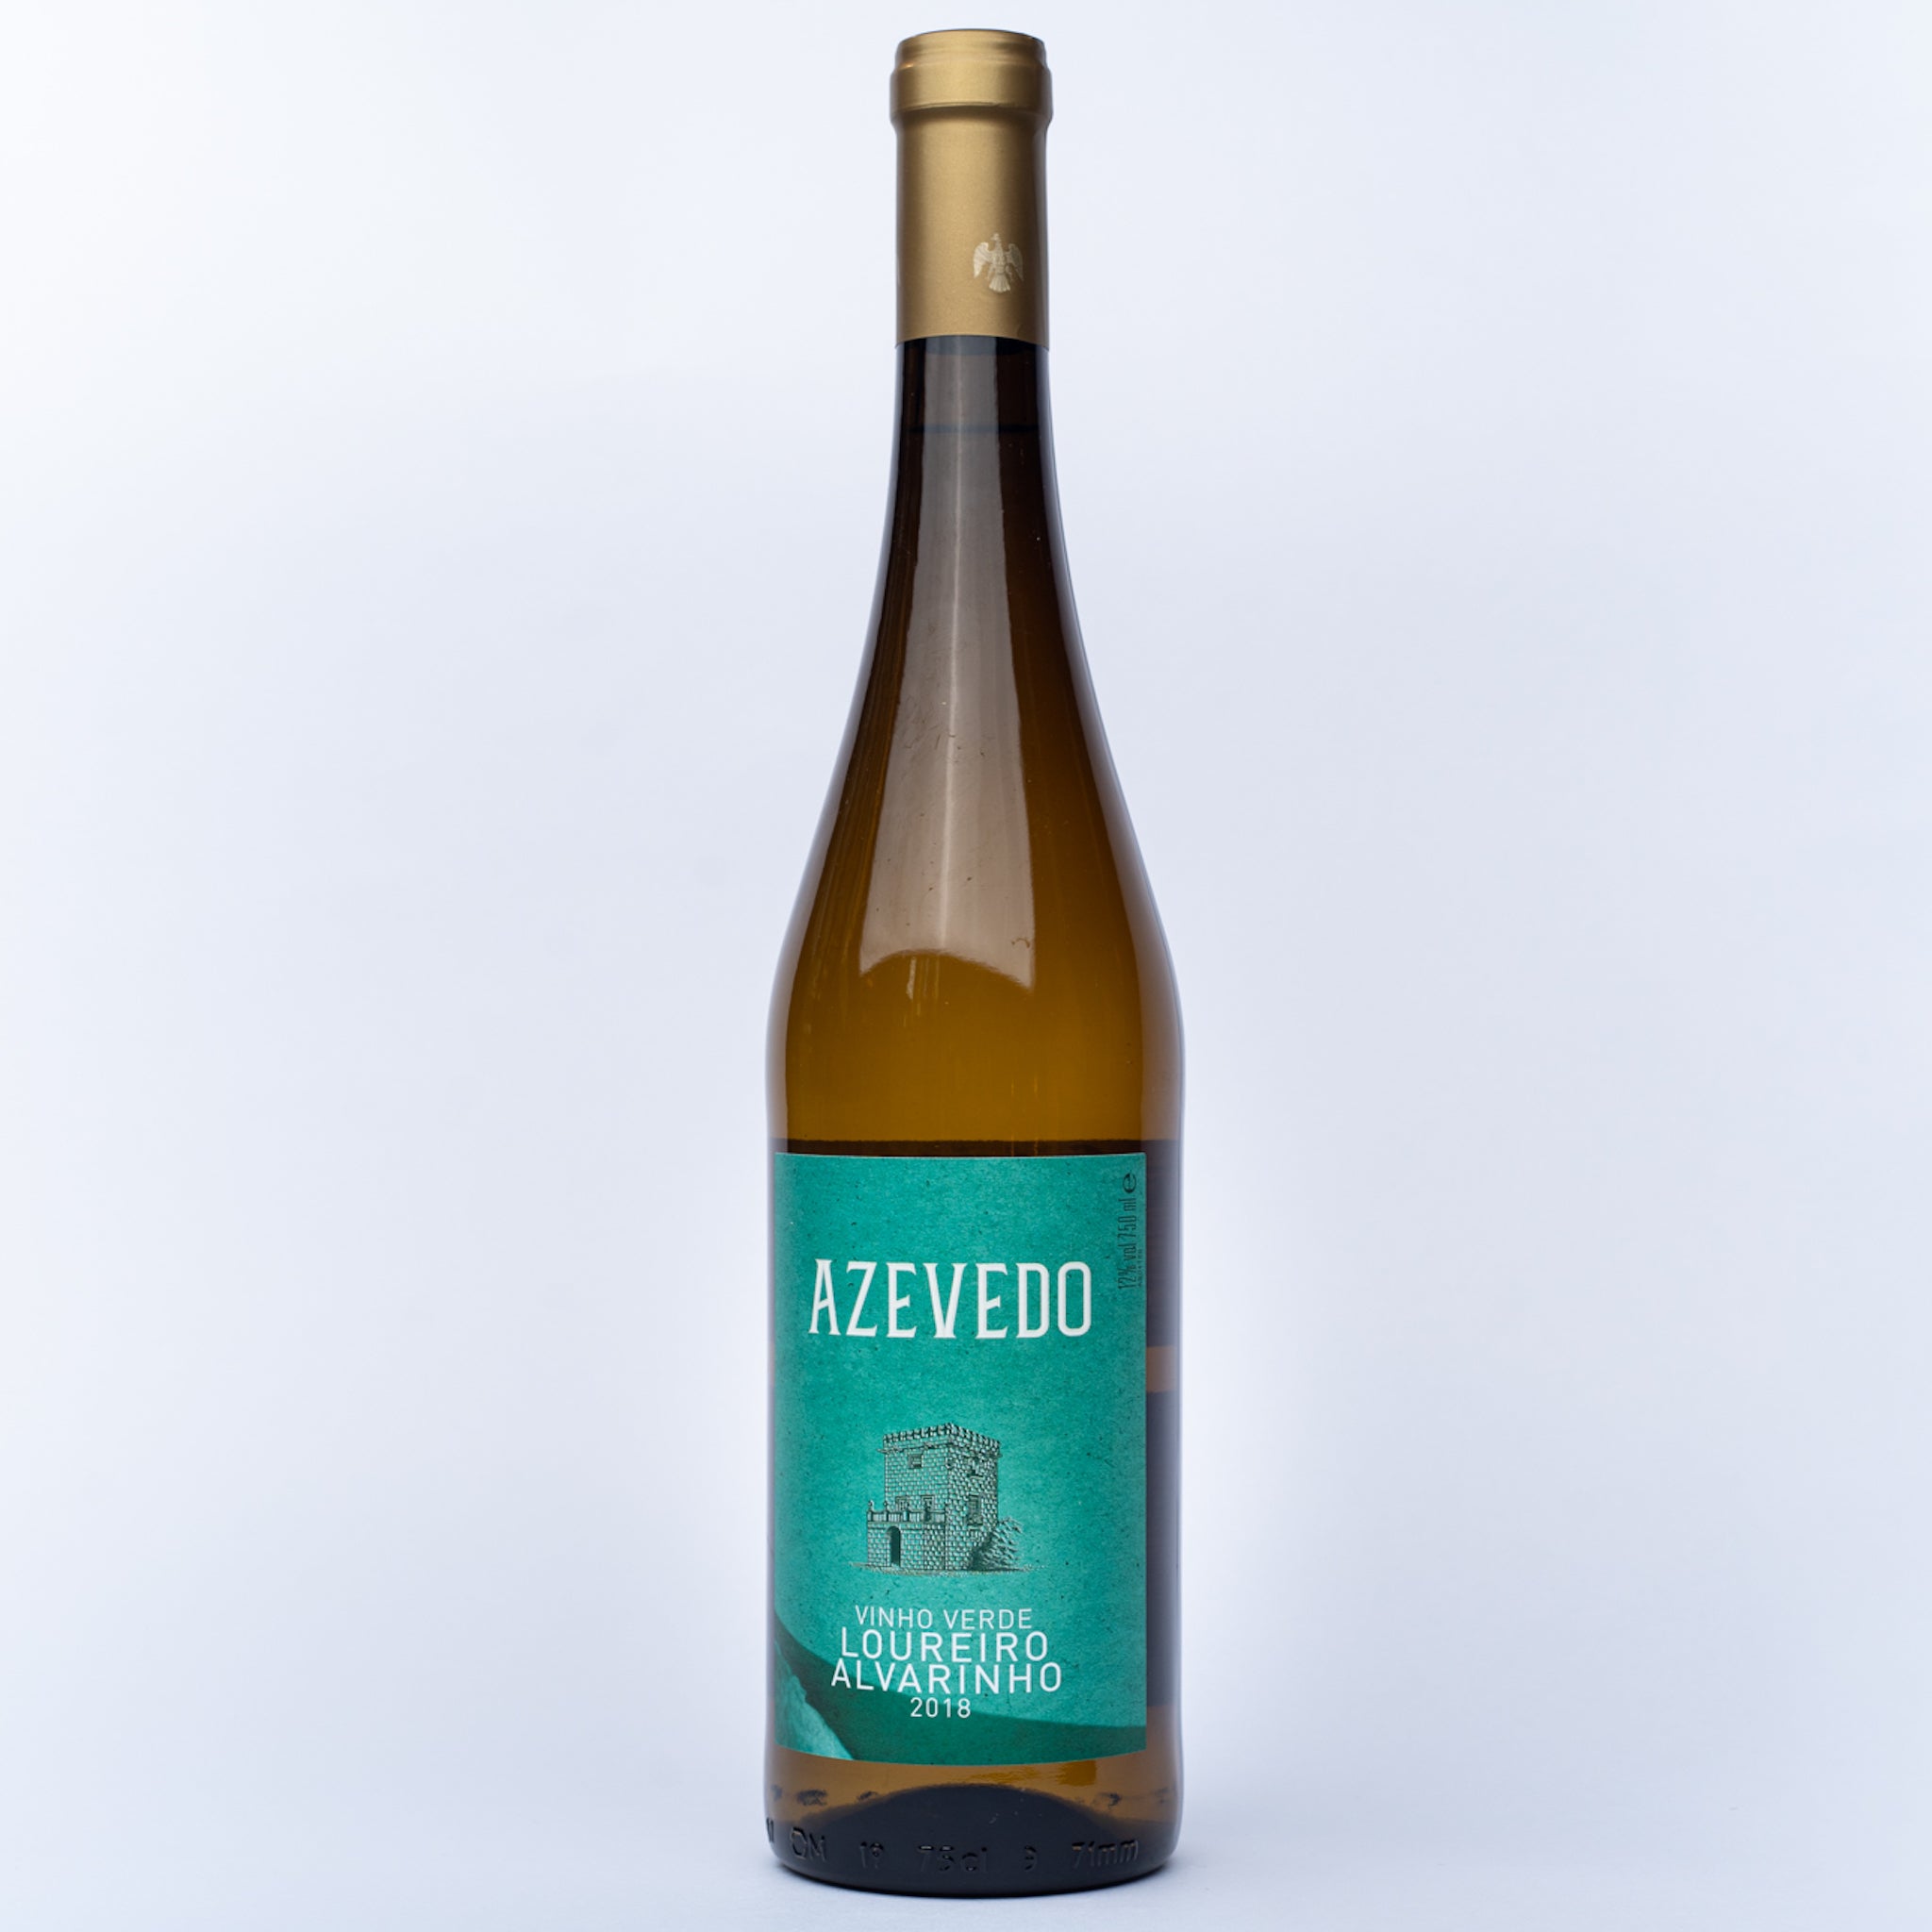 A glass bottle of Quinta de Azevedo Vinho Verde white wine.